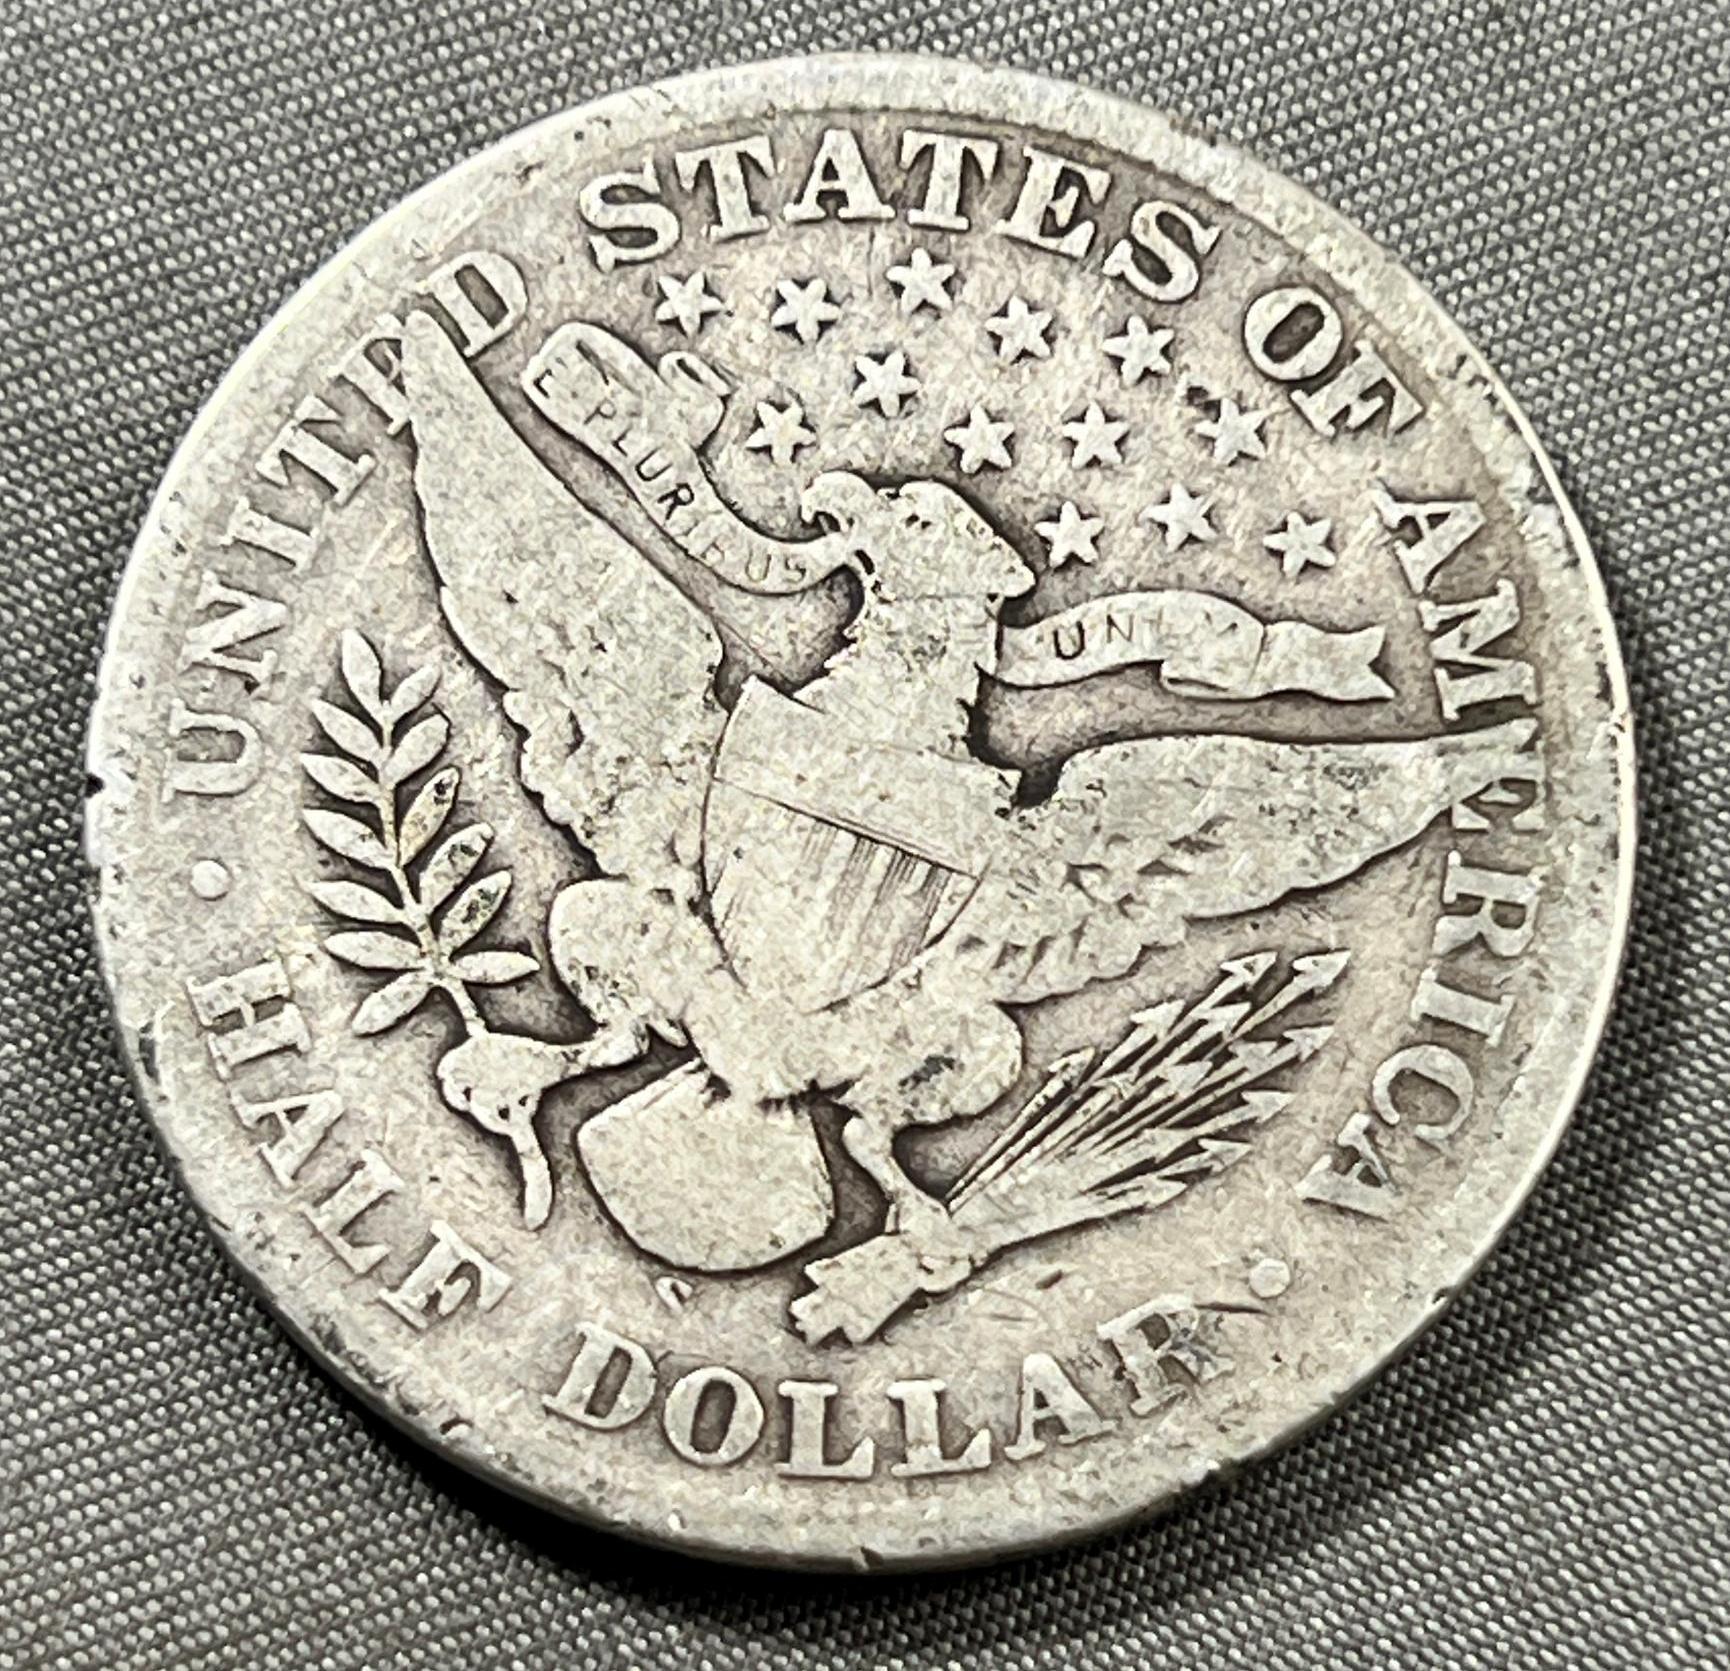 1910-S Barber Half Dollar, 90% silver